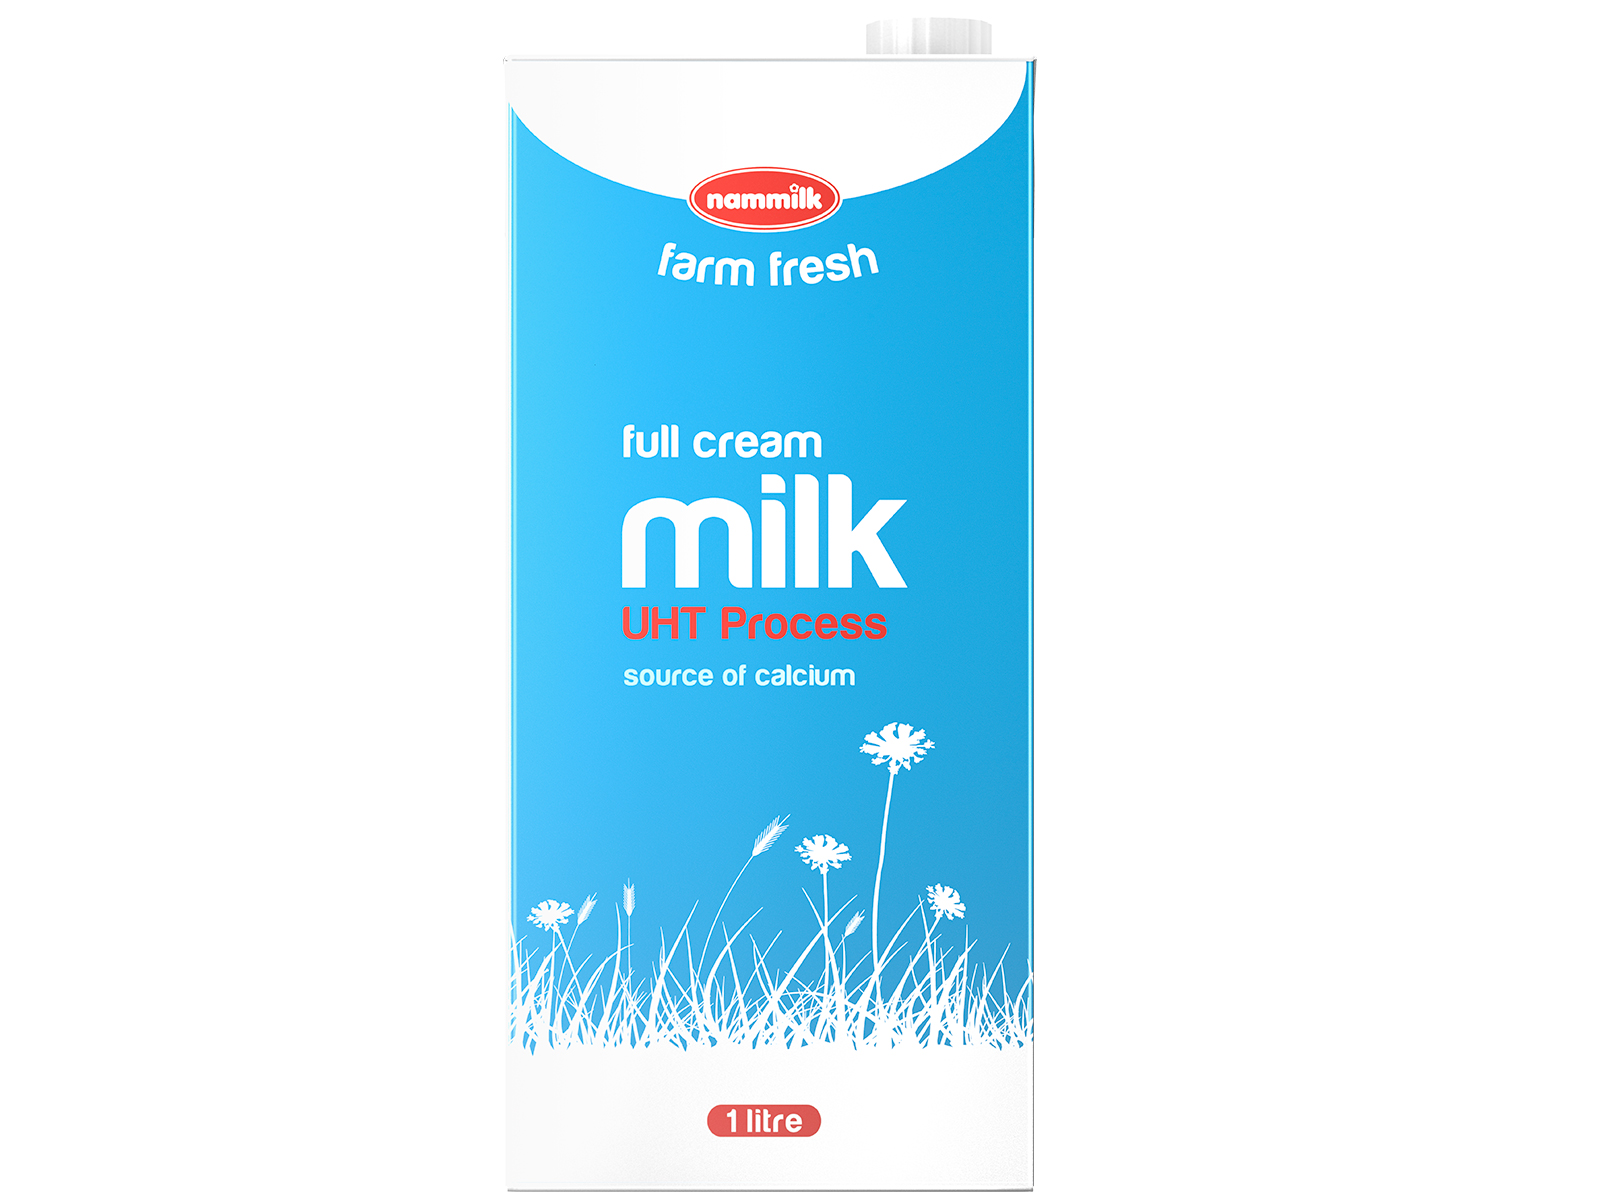 Full cream milk vs fresh milk